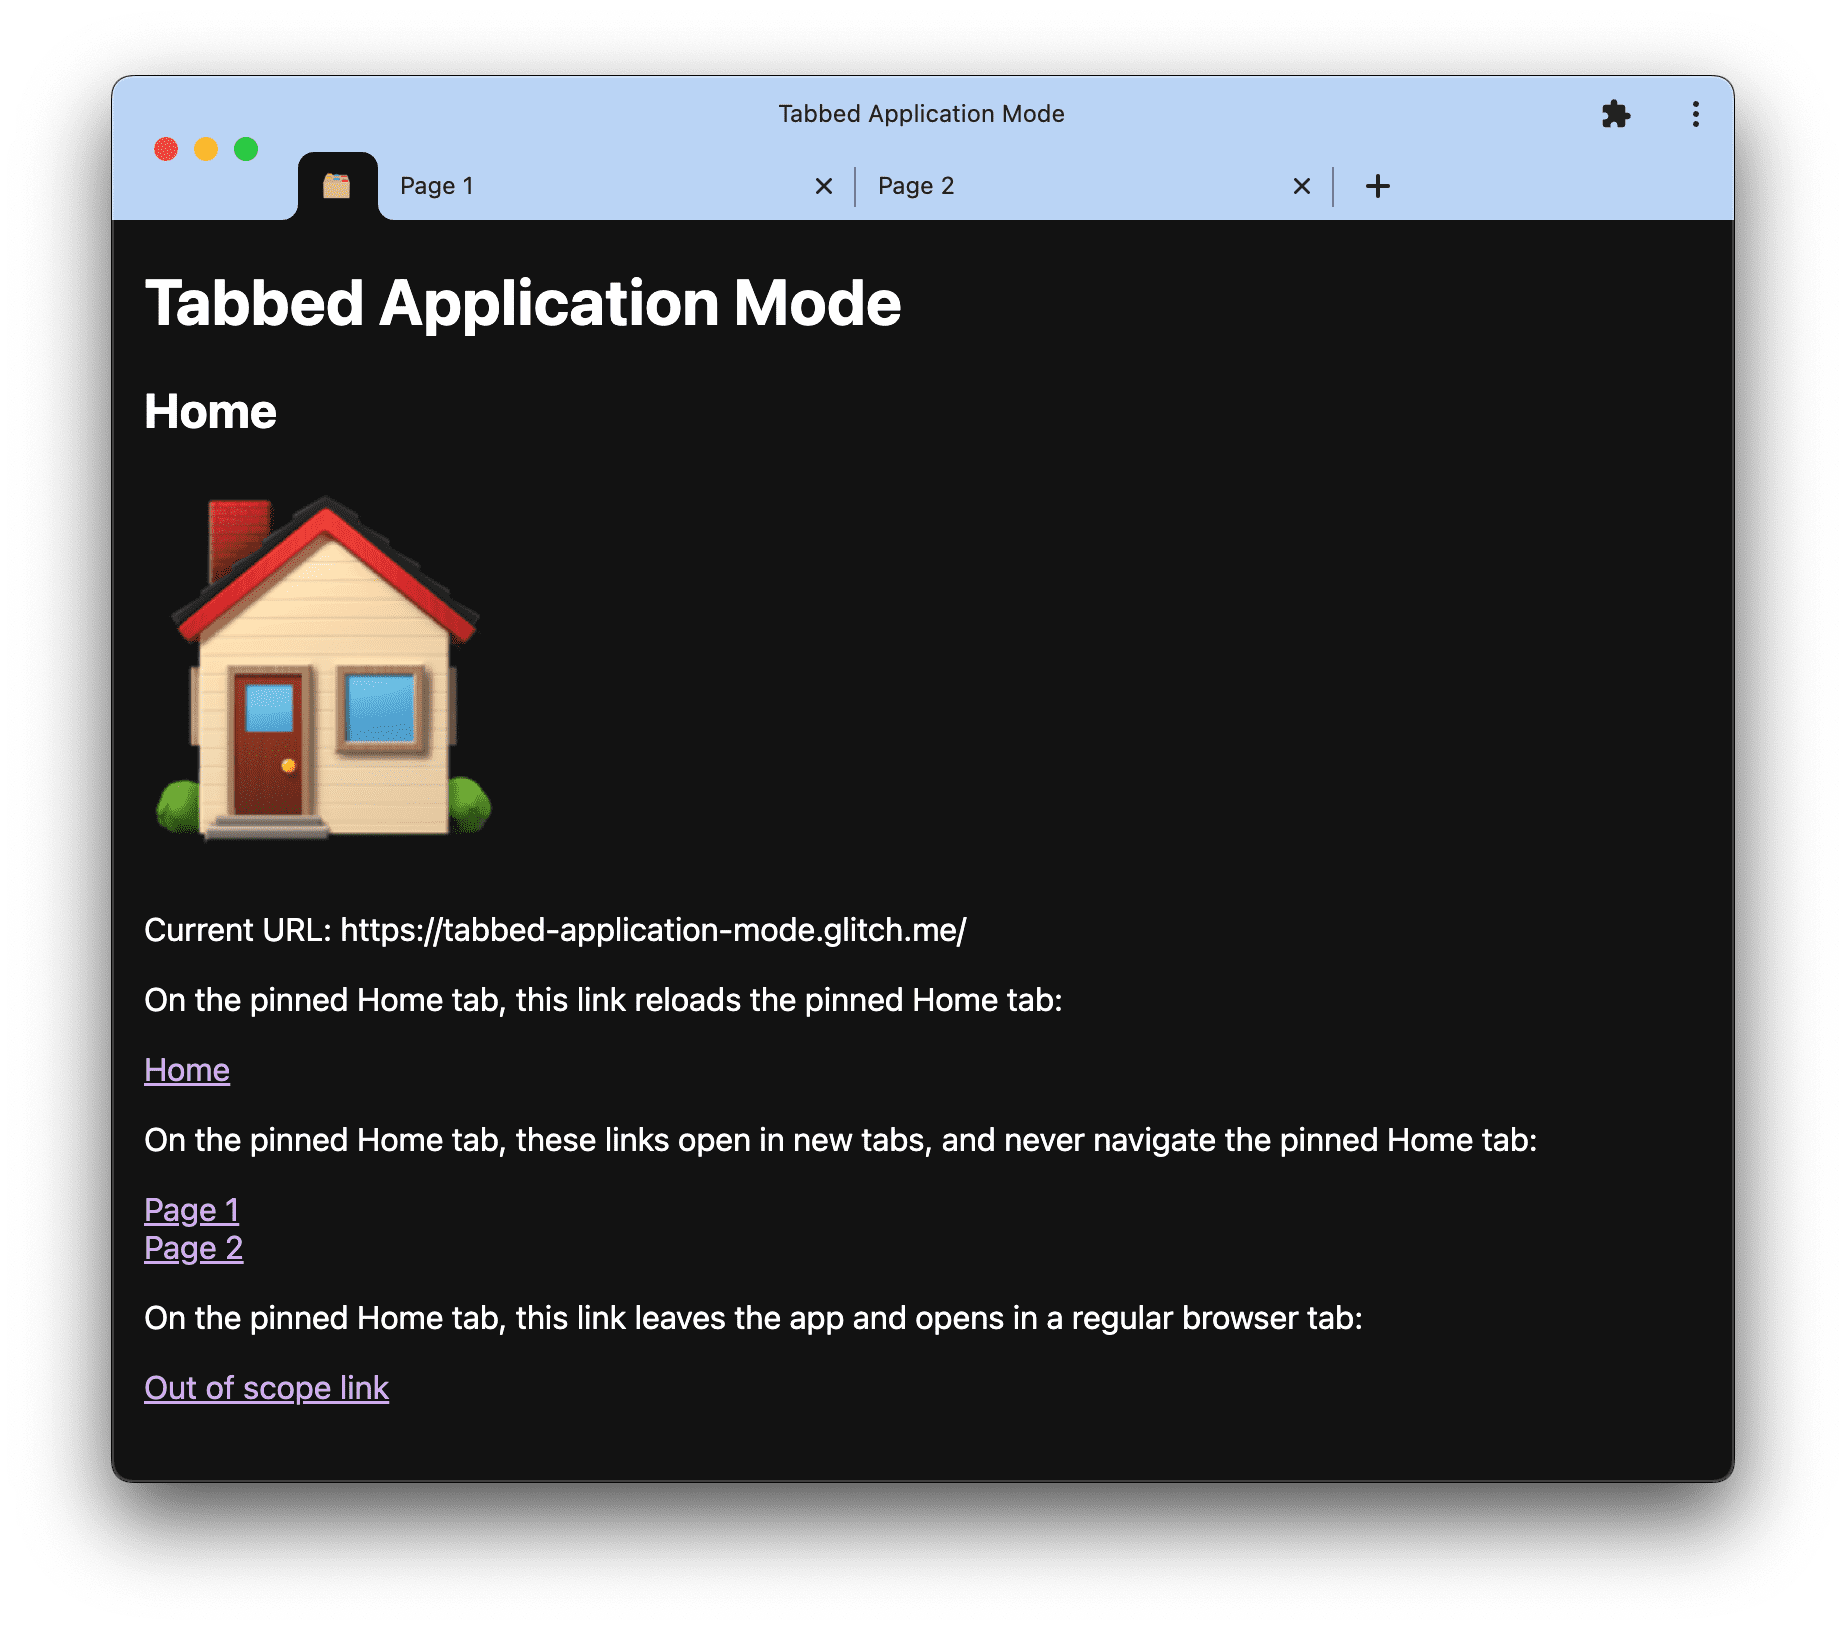 Screenshot of the tabbed application mode demo at tabbed-application-mode.glitch.me.